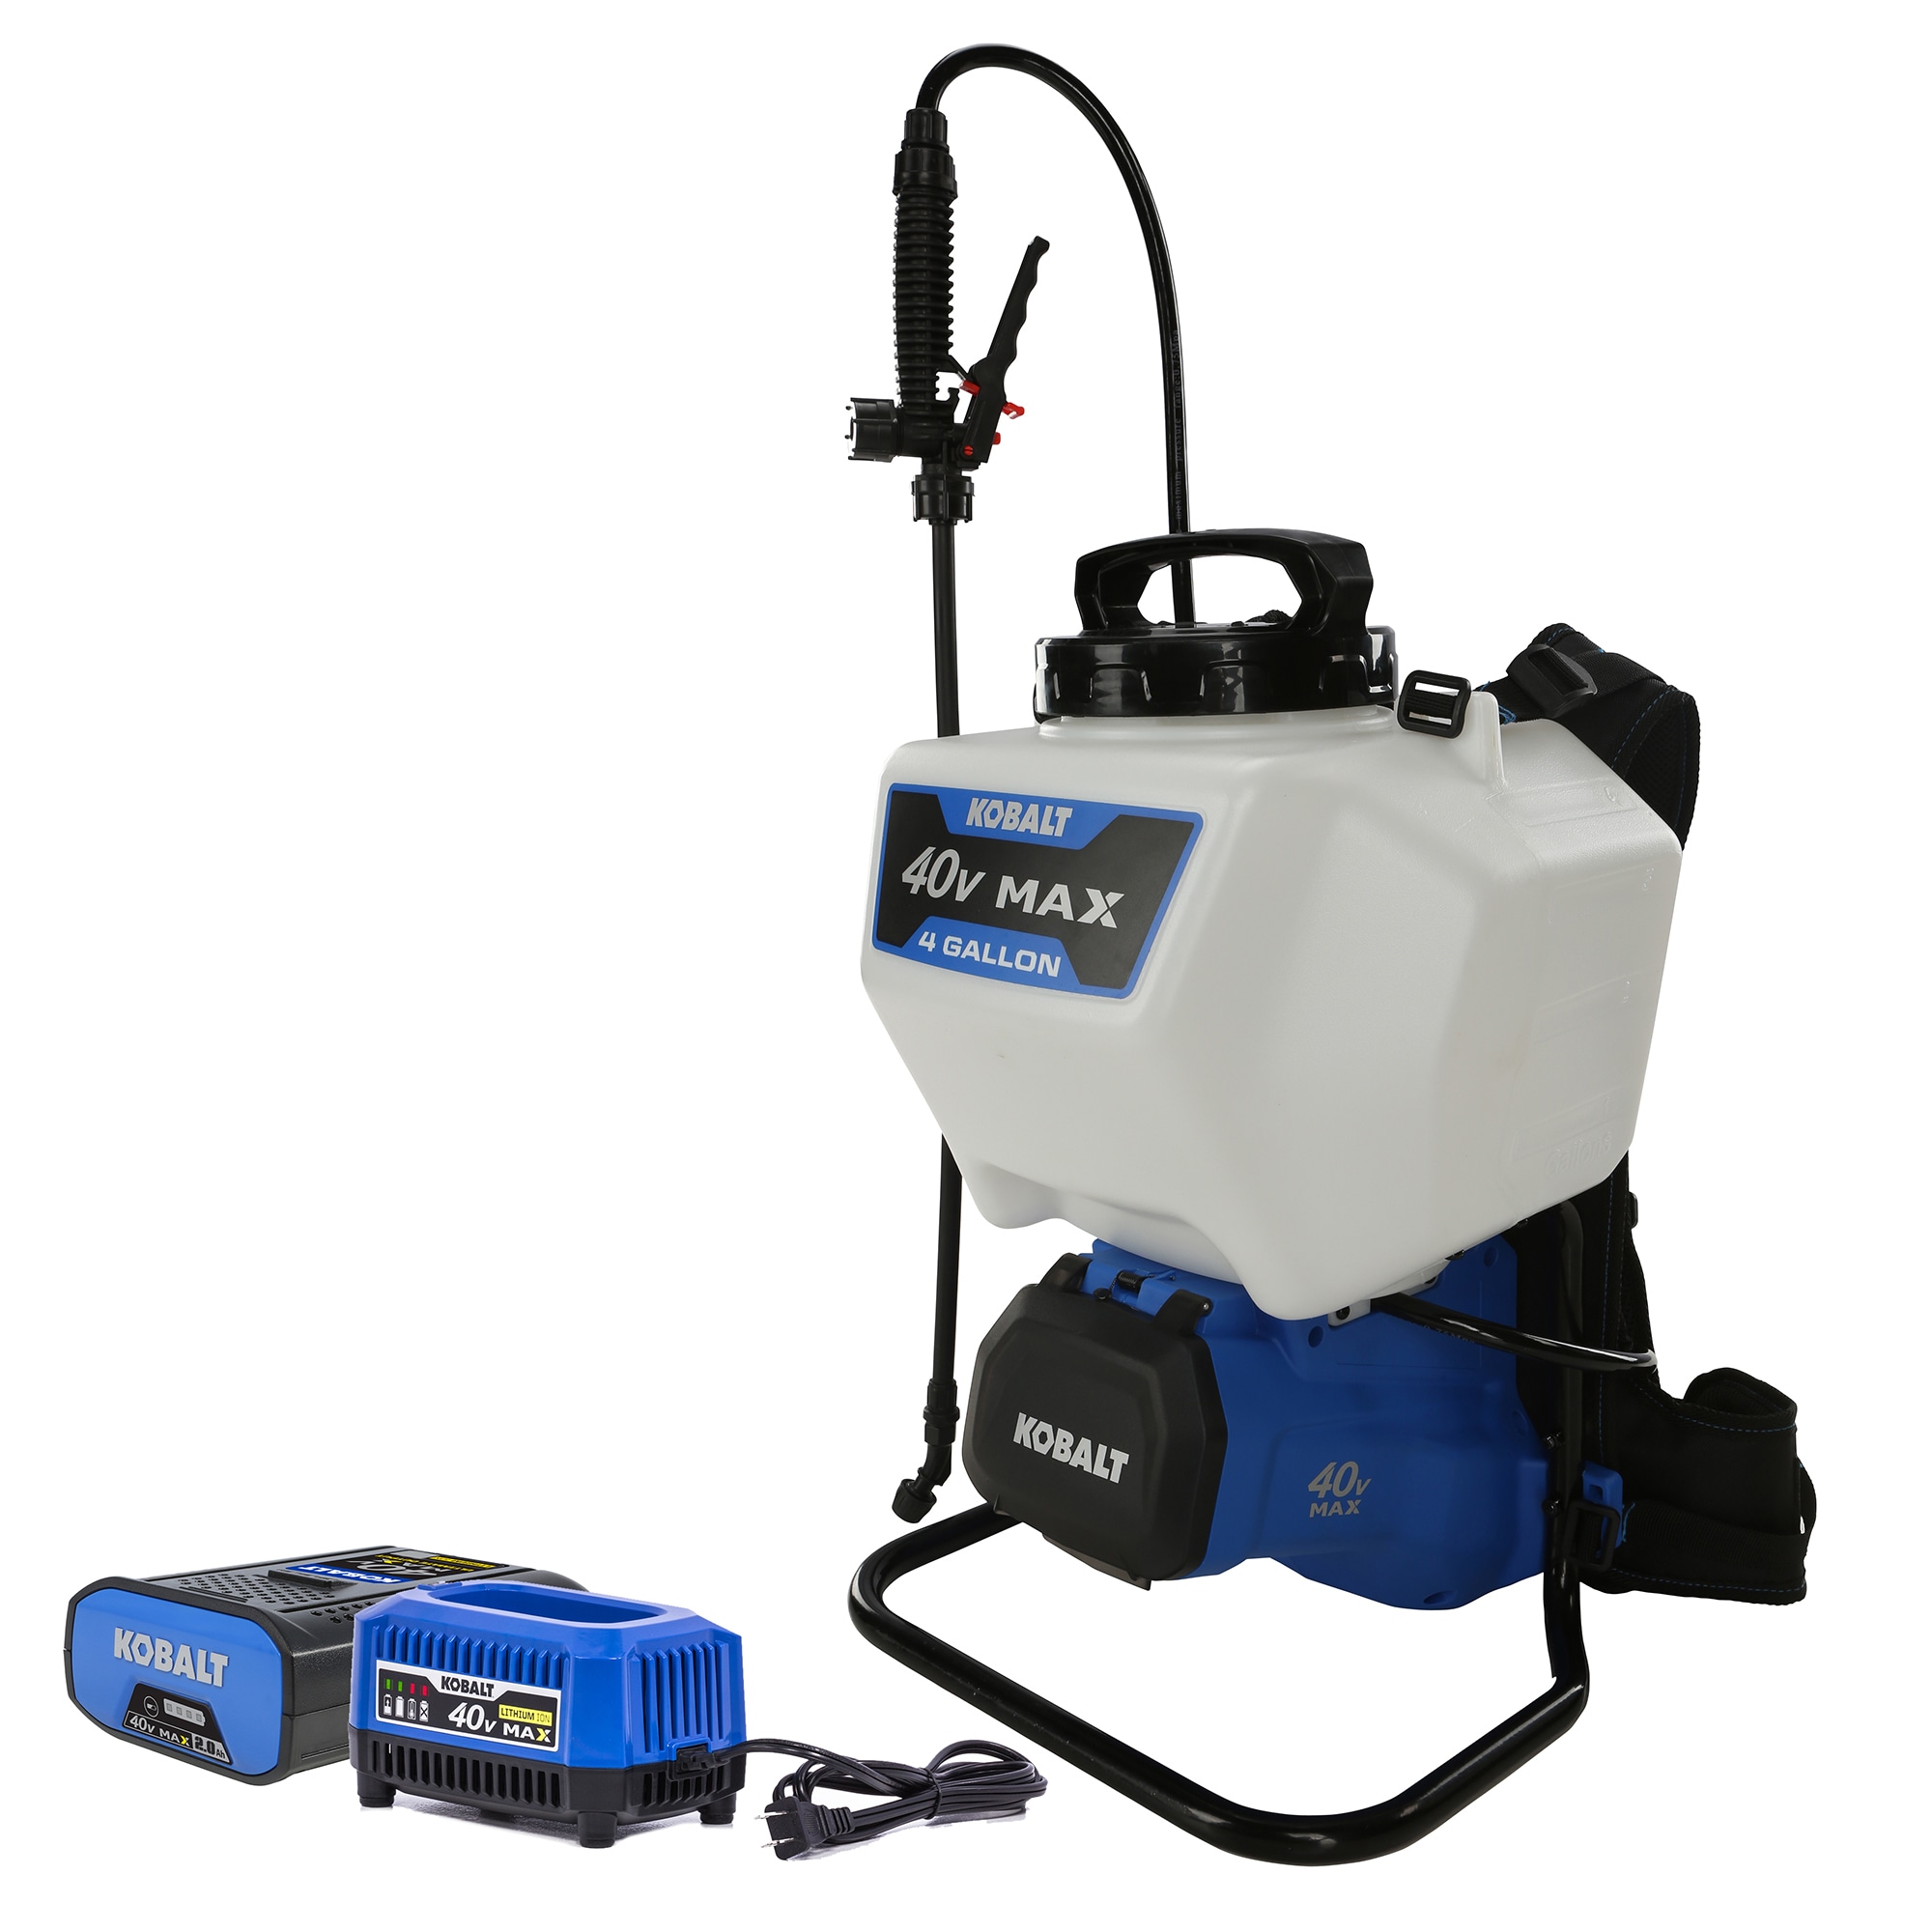 4-Gallons Plastic 40-volt Max Battery Operated Backpack Sprayer | - Kobalt KSP 2040-06